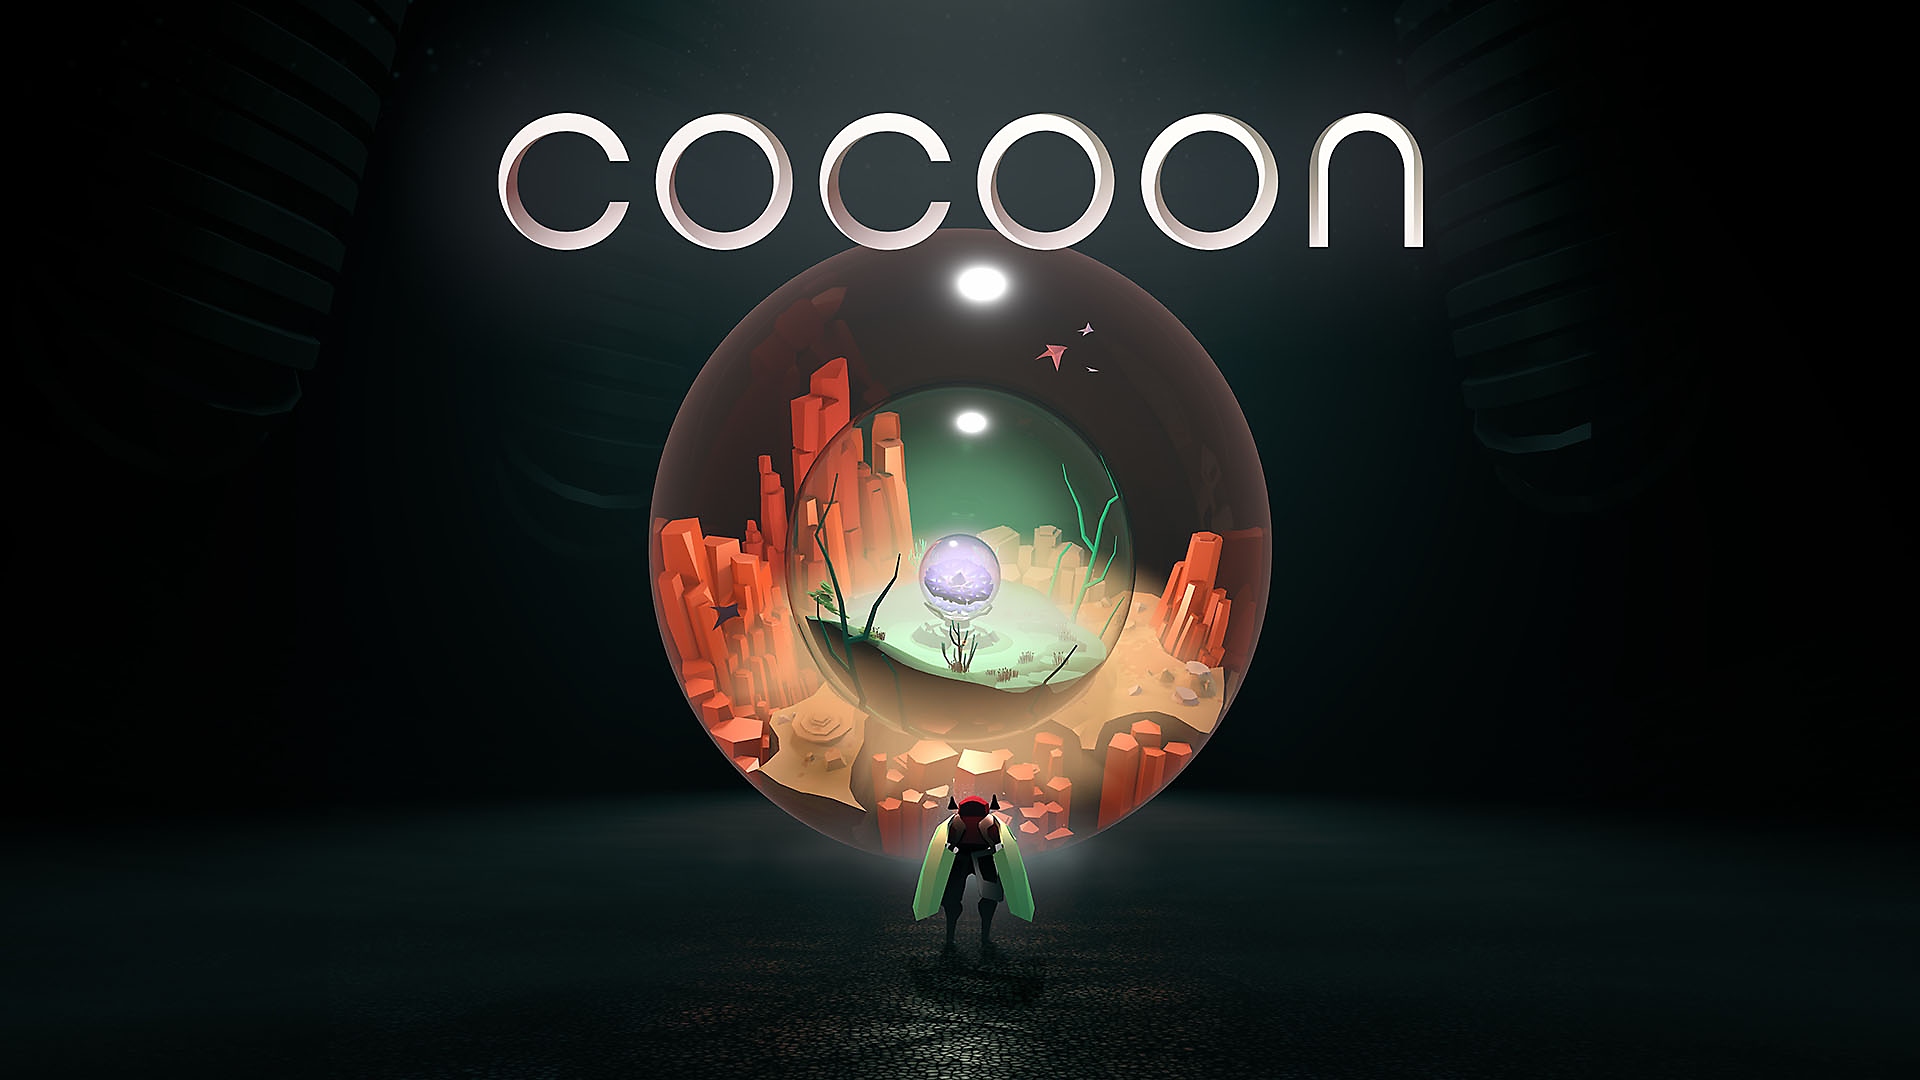 Cocoon launch trailer